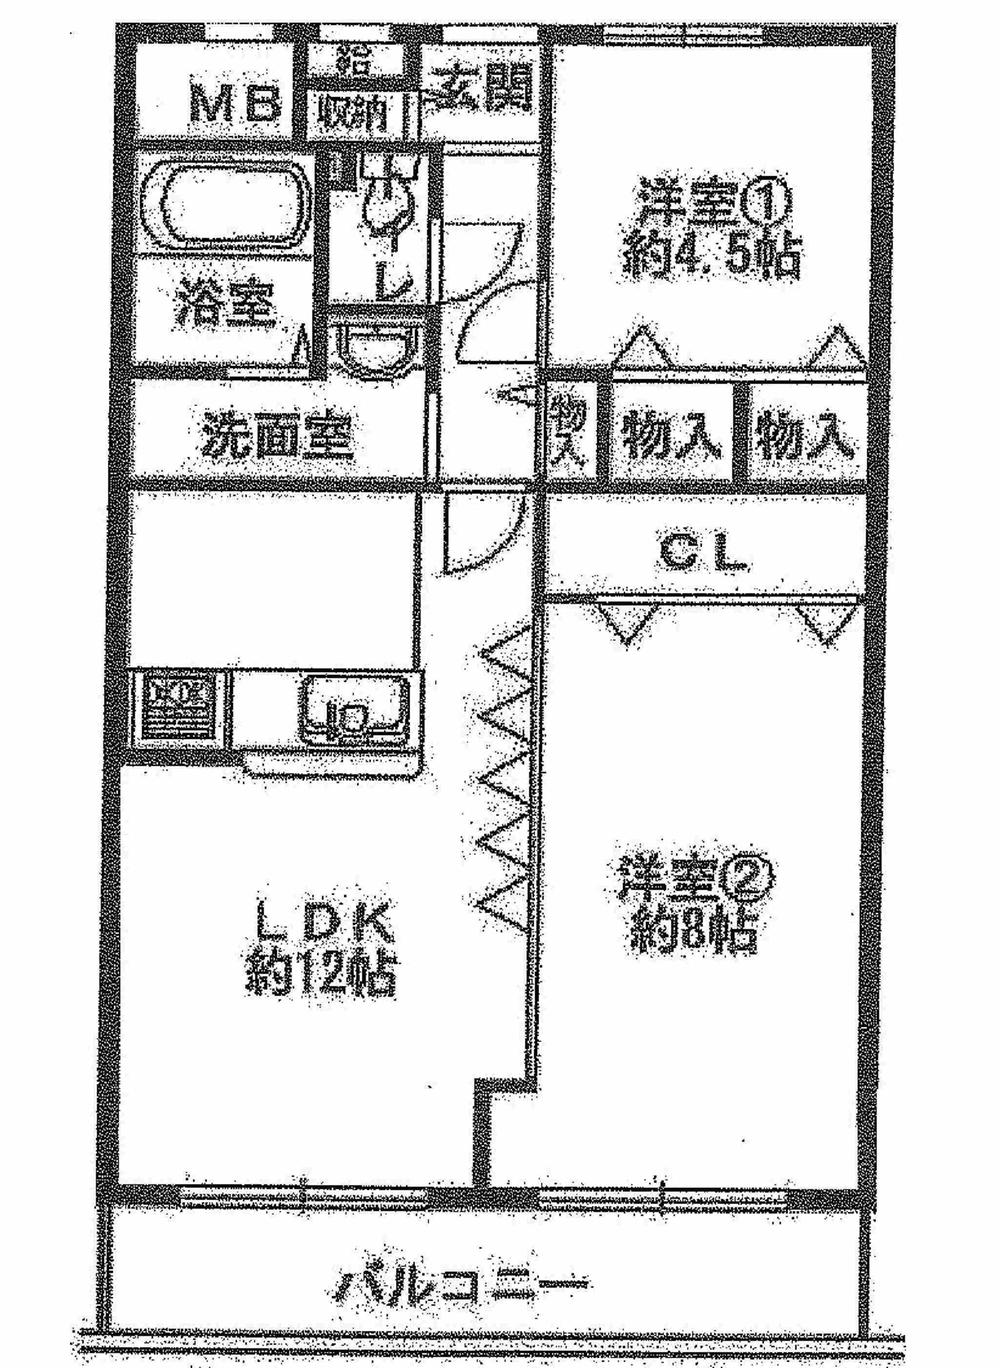 Floor plan. 2LDK, Price 9.3 million yen, Occupied area 57.84 sq m , Balcony area 7.84 sq m   ☆ Renovated ・ Immediate Available